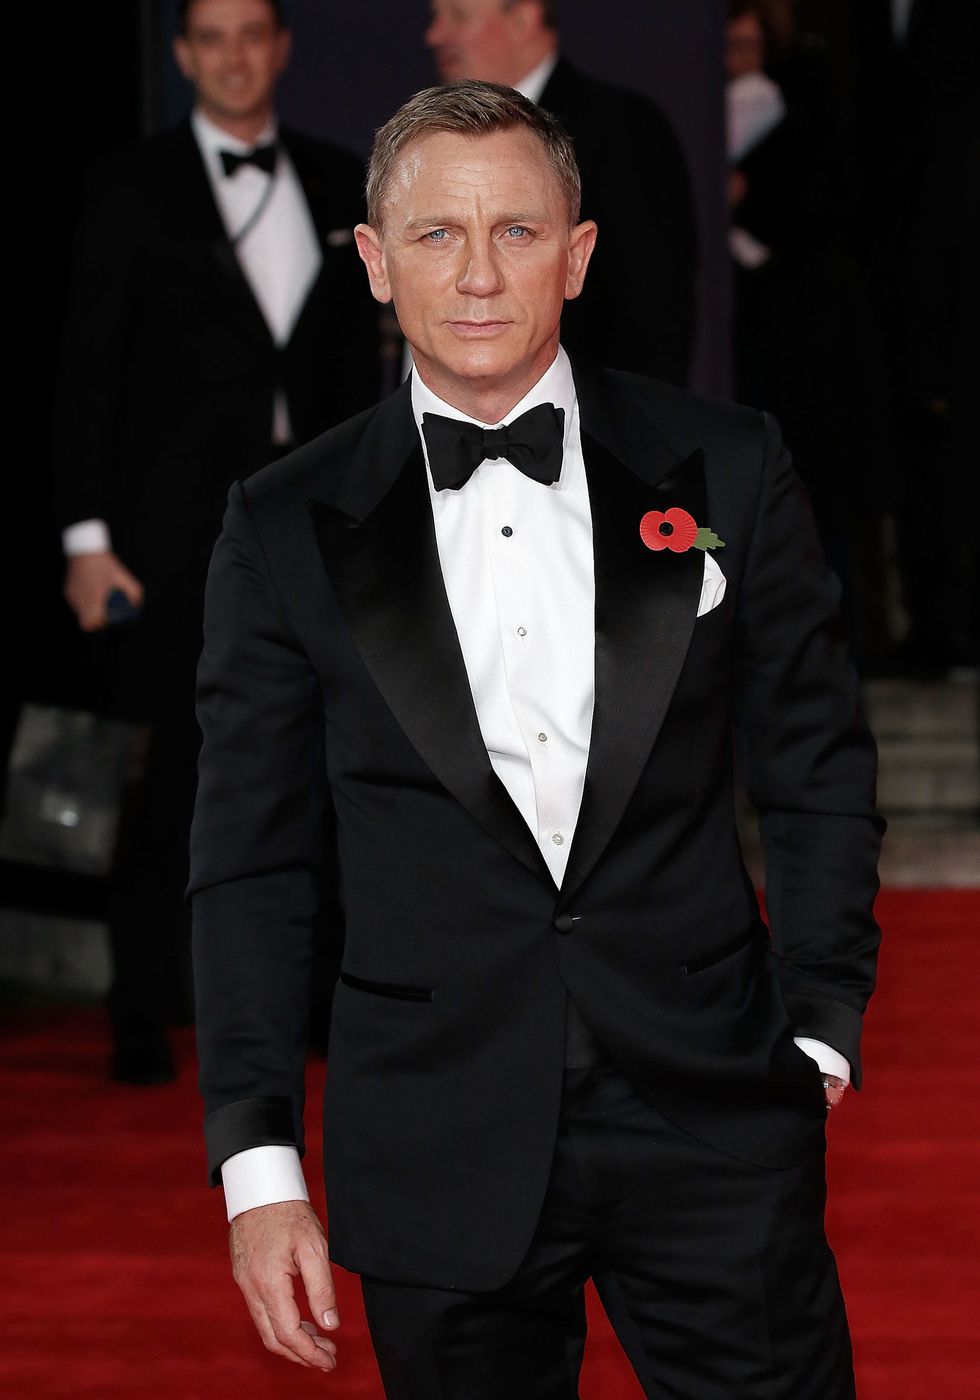 <p><strong data-redactor-tag="strong" data-verified="redactor"></strong><strong data-redactor-tag="strong" data-verified="redactor">Daniel Craig（ダニエル・クレイグ）</strong></p>

<p>1968年生まれ。映画『007』シリーズのボンド役で知られるイギリス出身の俳優。映画では男くさくシブい役柄が多く、私生活では2011年にレイチェル・ワイズと再婚を果たし、公の場で彼女を<a href="http://www.dailymail.co.uk/tvshowbiz/article-3310327/Rachel-Weisz-Daniel-Craig-memorial-event-late-director-Mike-Nichols.html">エスコートする姿</a>もまさにボンドのように紳士でクール。しかし、プライベートで一般人に混ざってニューヨークの街角を<a href="http://www.dailymail.co.uk/tvshowbiz/article-3330803/Daniel-Craig-enjoys-romantic-stroll-wife-Rachel-Weisz-gruelling-Spectre-promo-tour-comes-end.html">デートする姿</a>は...？ 自在にオーラを消してしまえるあたり、これぞミスター・ボンドです！</p>